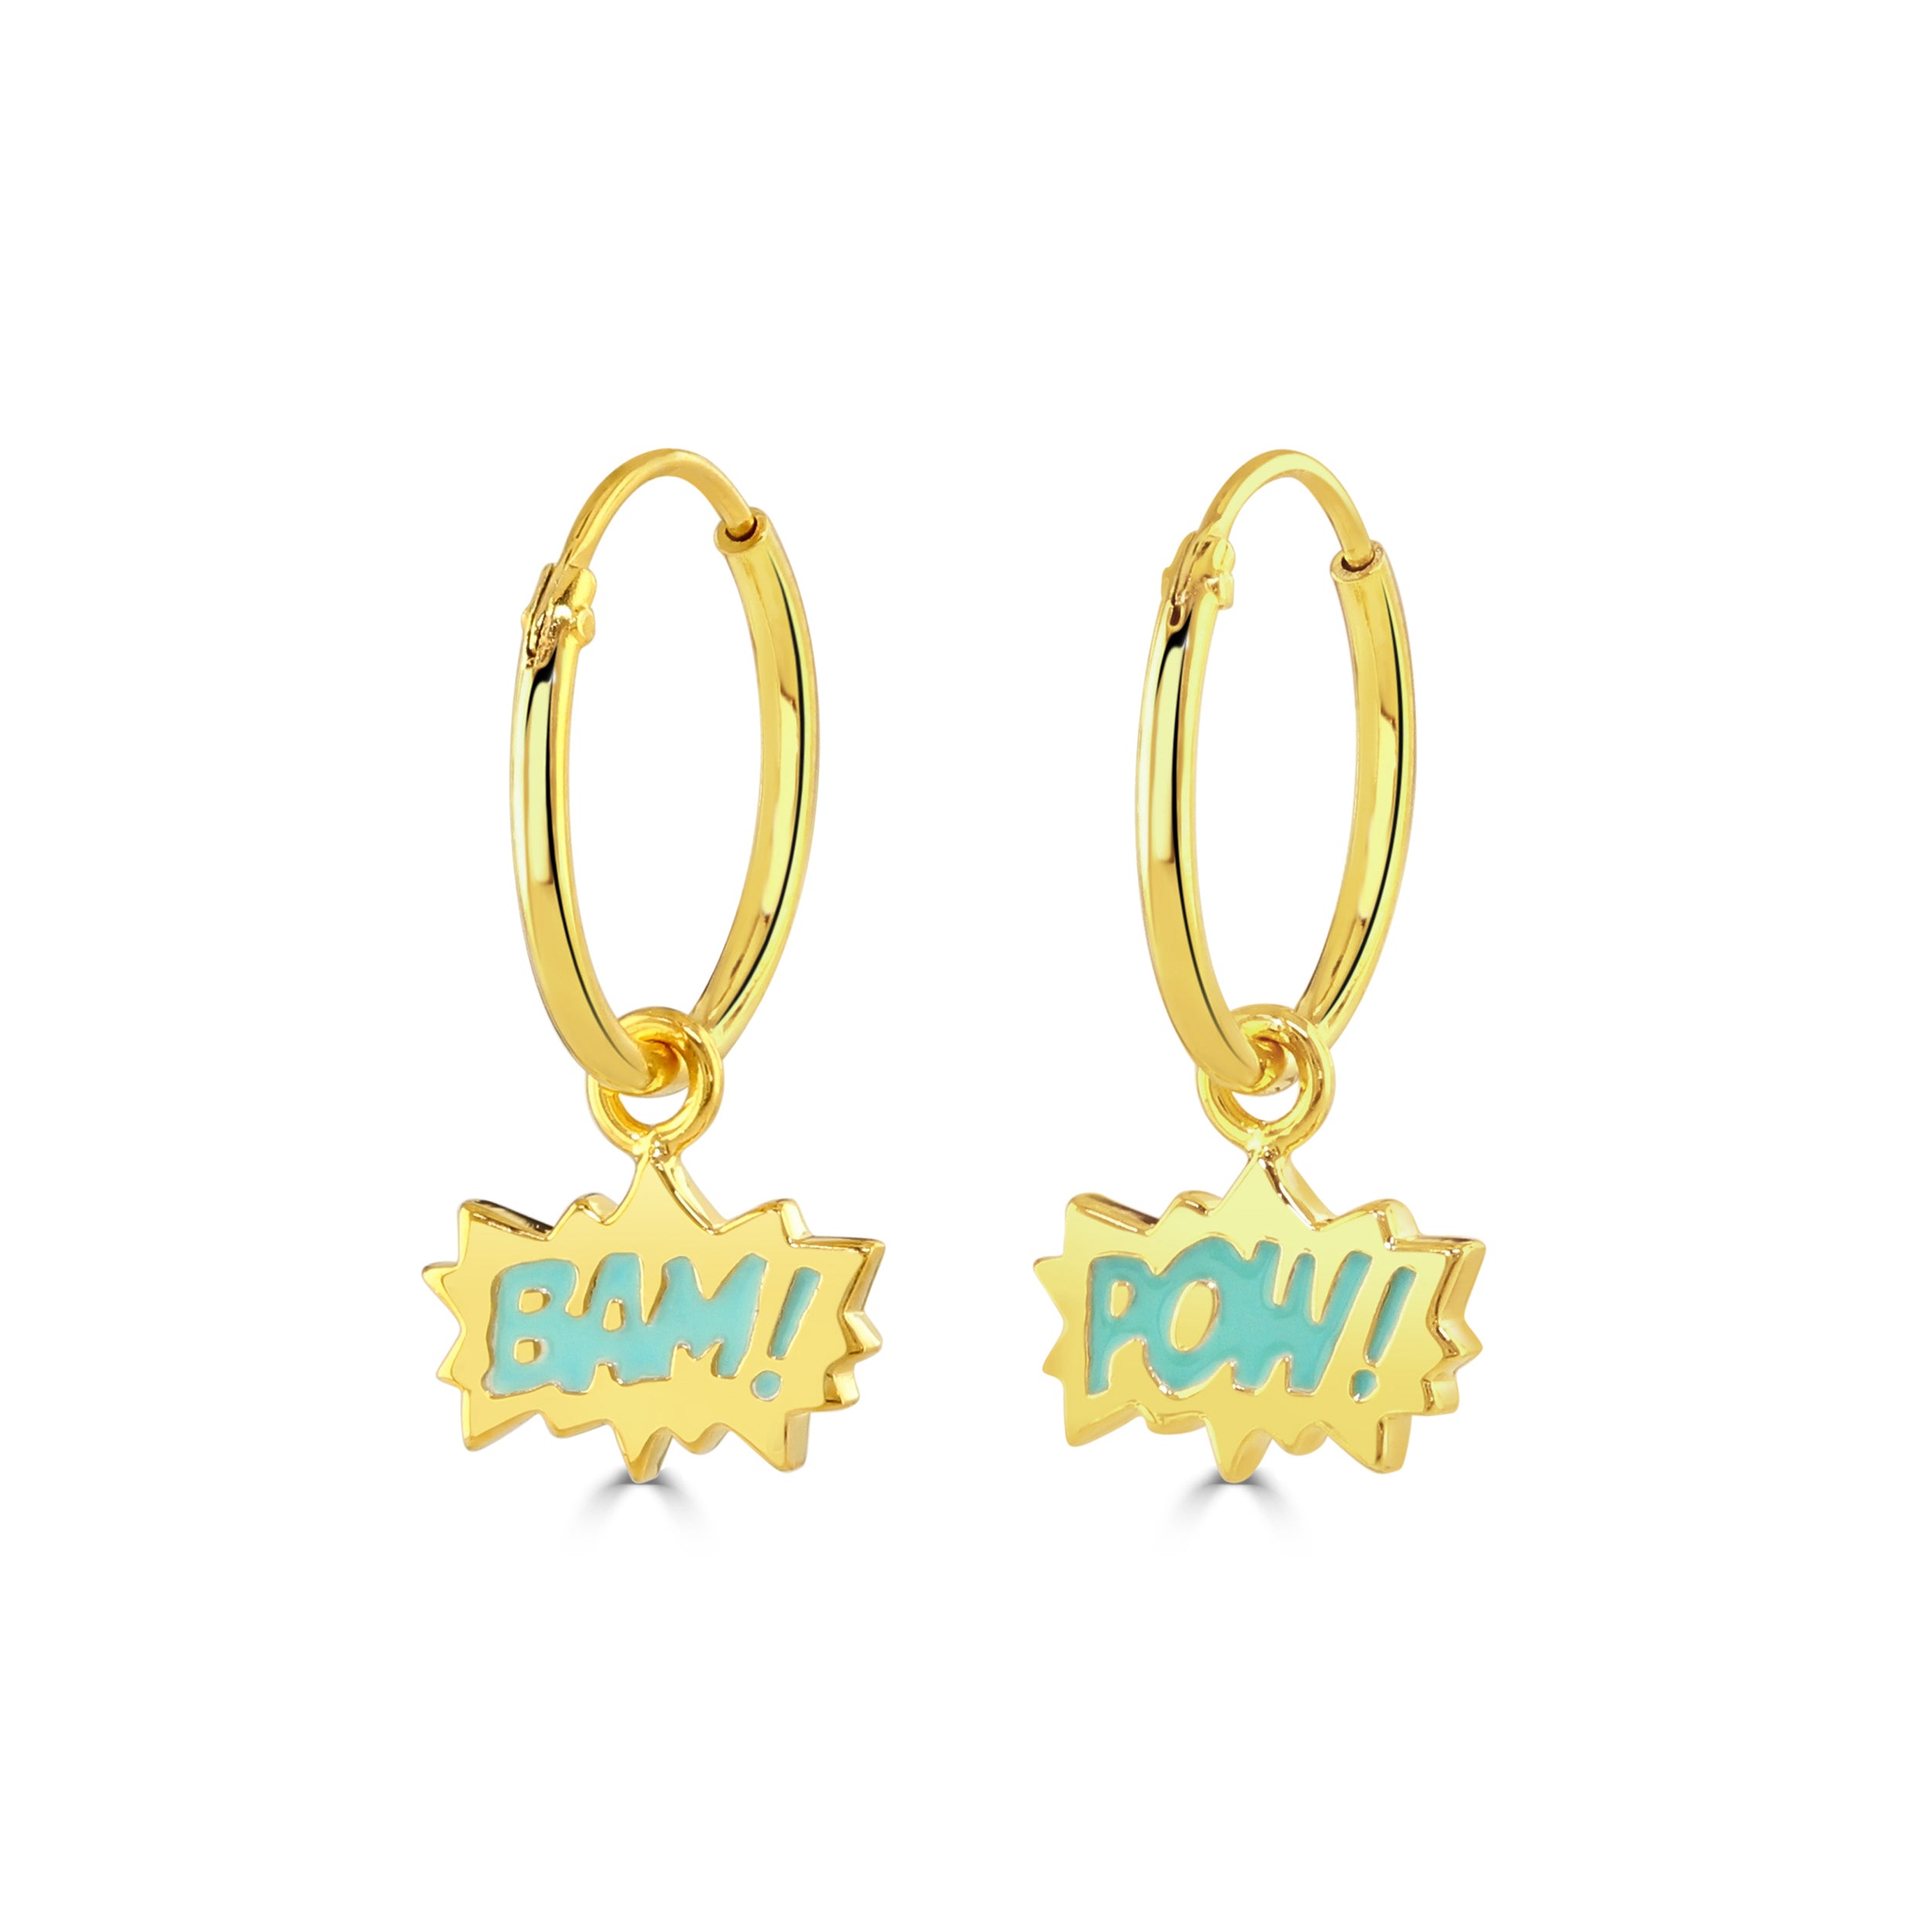 Gold Bam! & Pow! Hoop Earrings